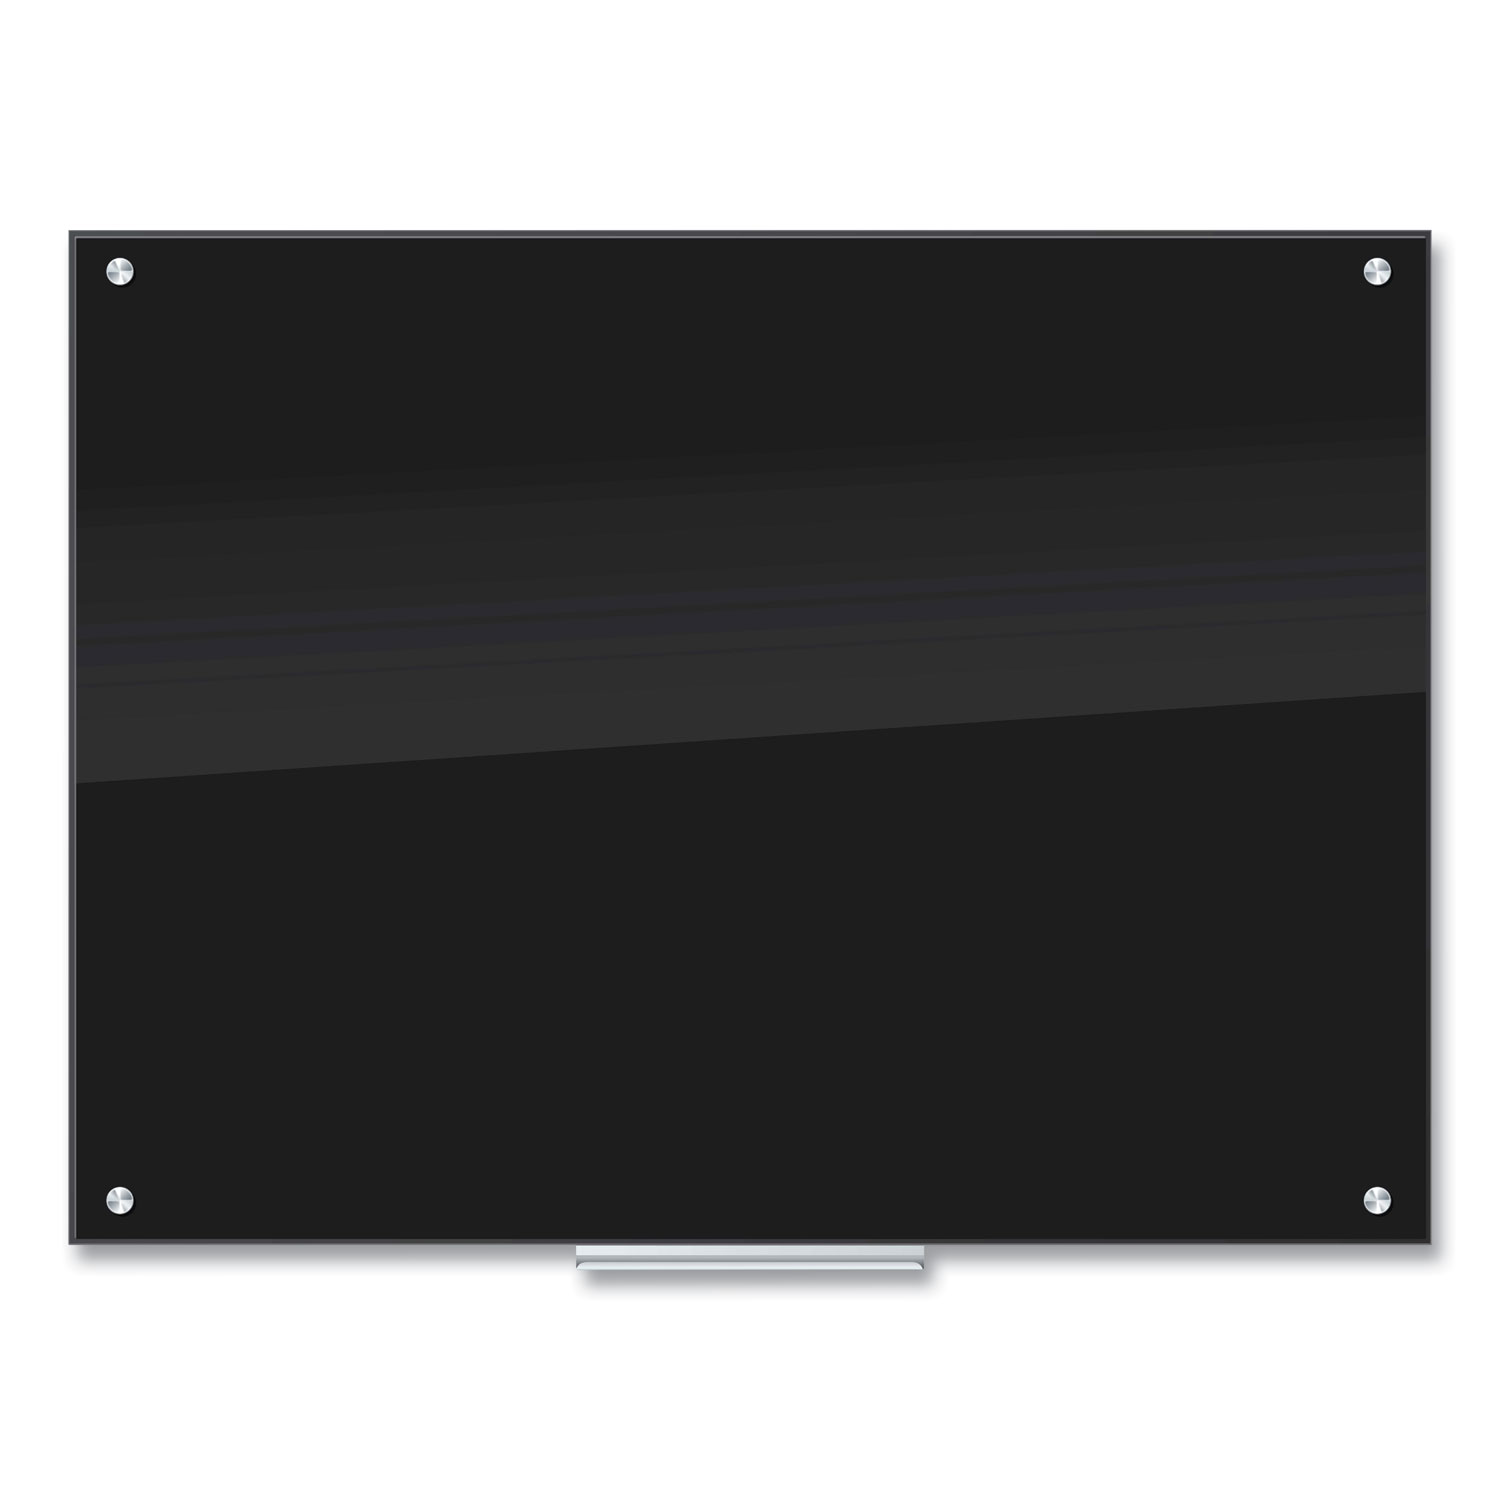 Glass Dry Erase Board, 48 x 36, White Surface, U Brands (UBR121U0001)